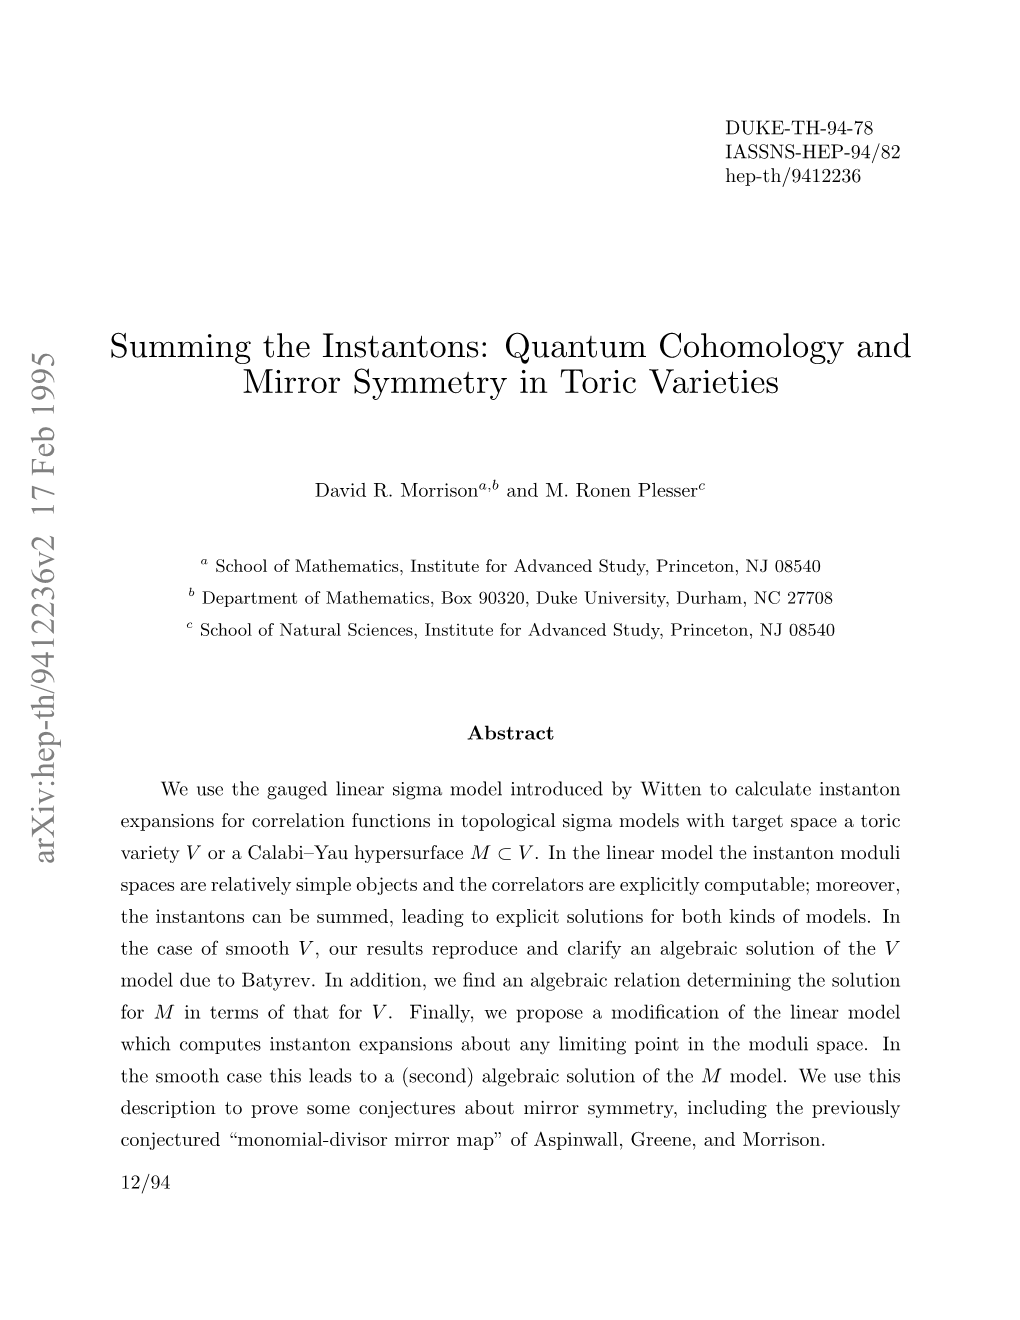 Quantum Cohomology and Mirror Symmetry in Toric Varieties